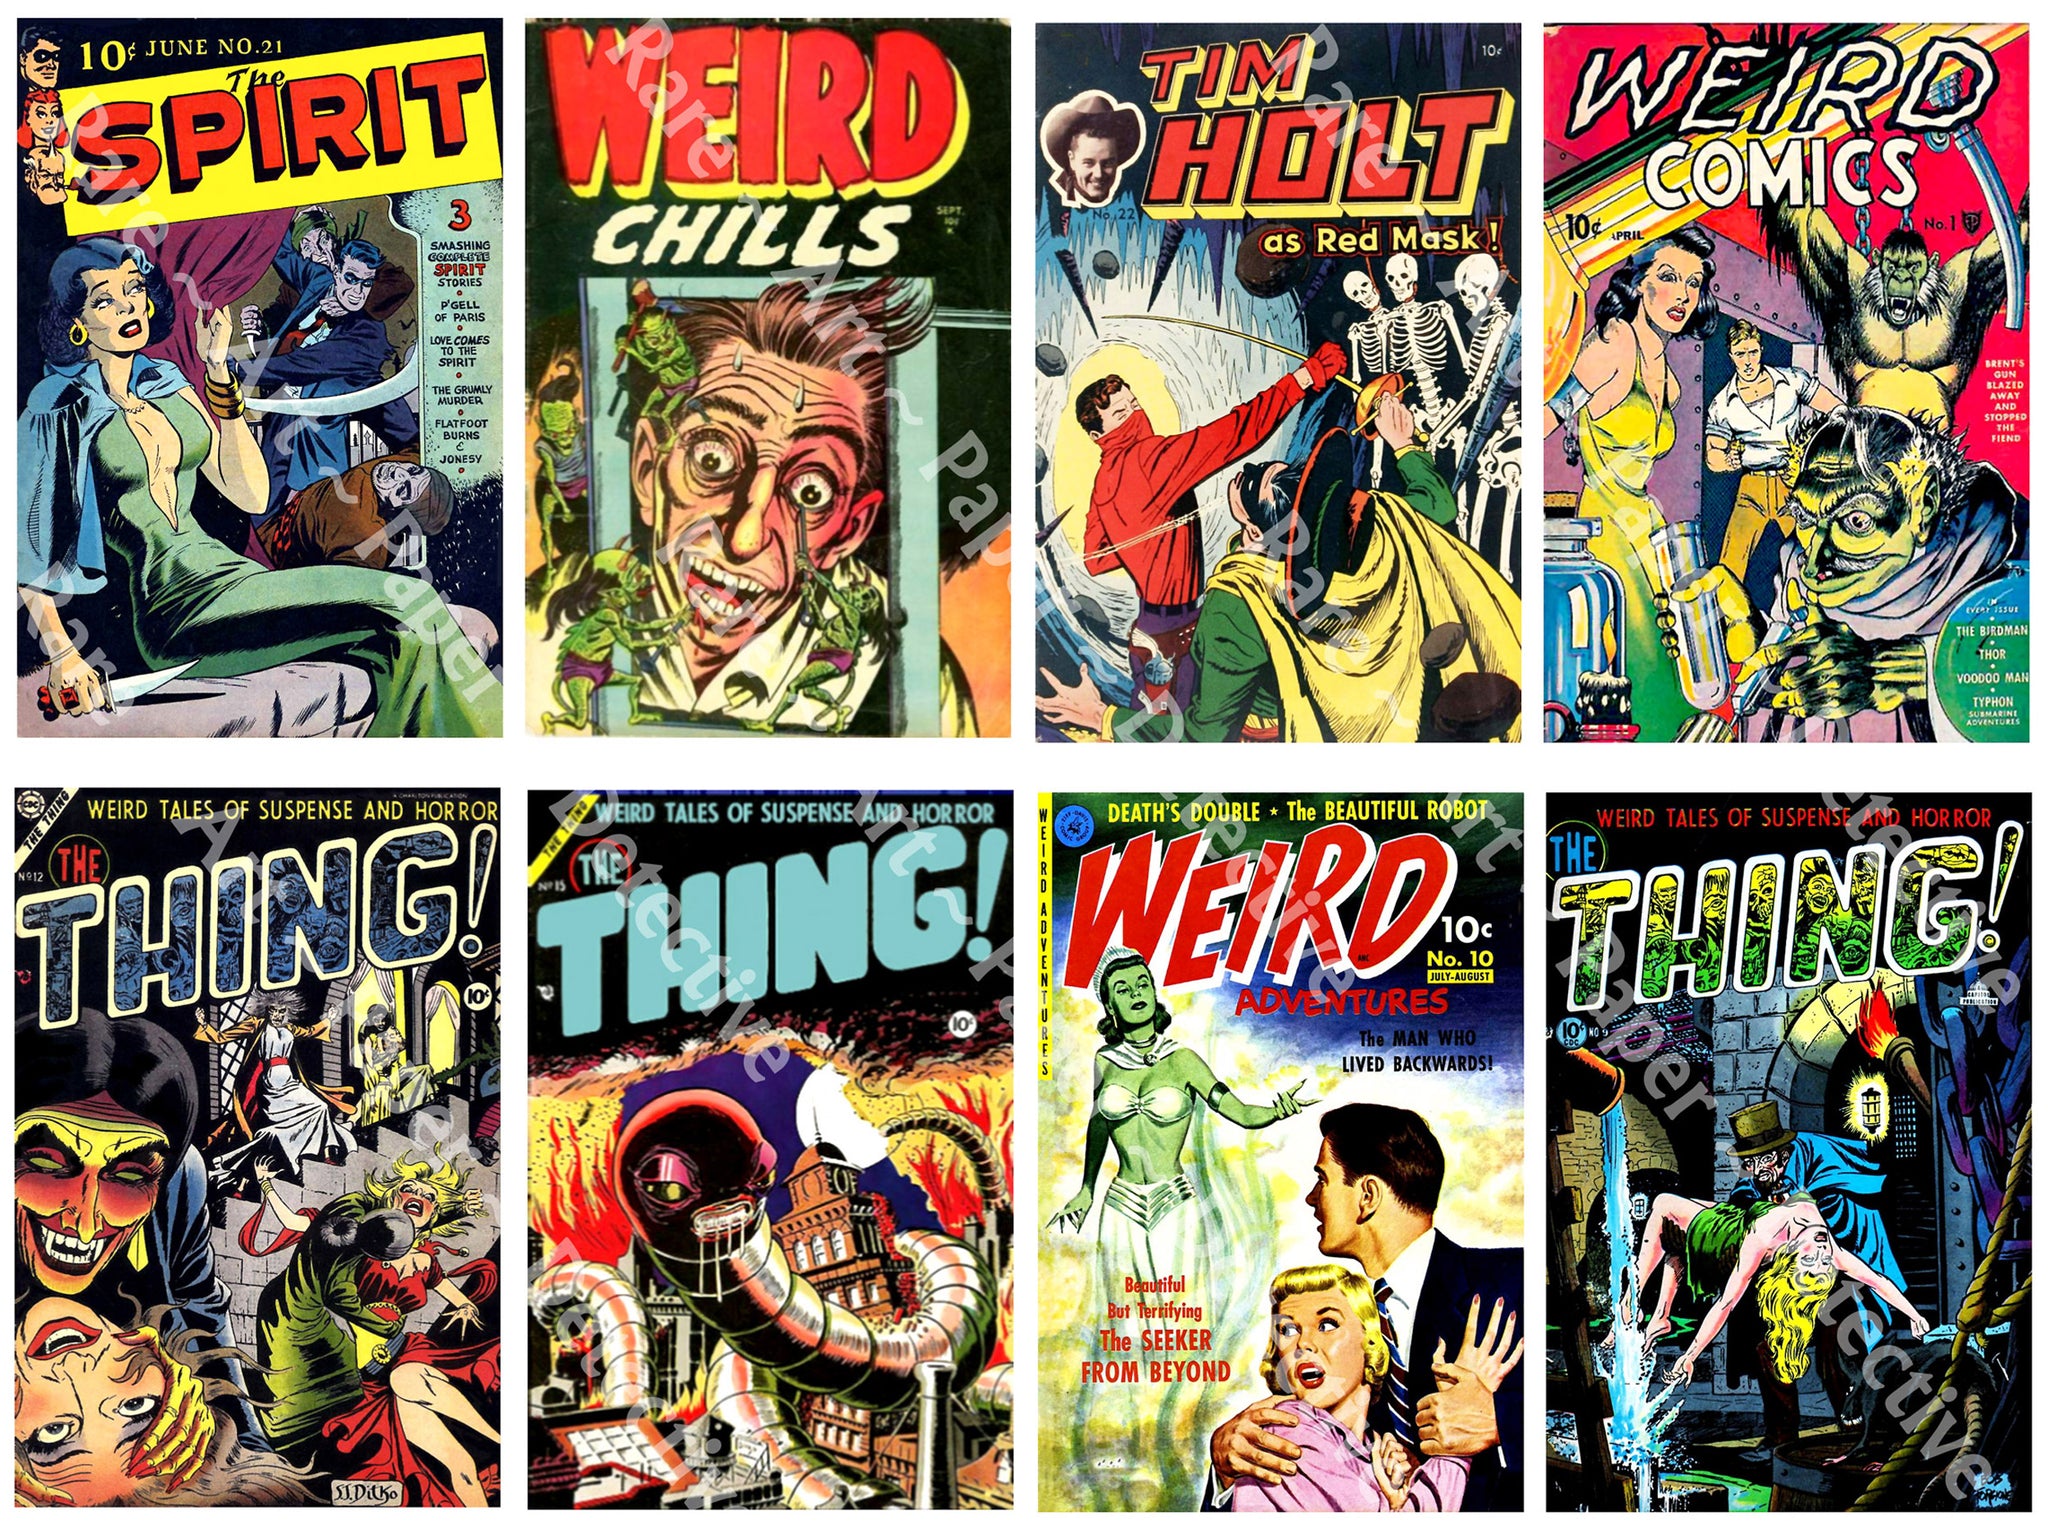 Horror Comic Book Covers, Classic Horror Comics, Vintage Halloween Sticker Décor, 2.5" x 3.75" Tags, DIY Projects and Décor, CUT & PEEL Sheet, 1179